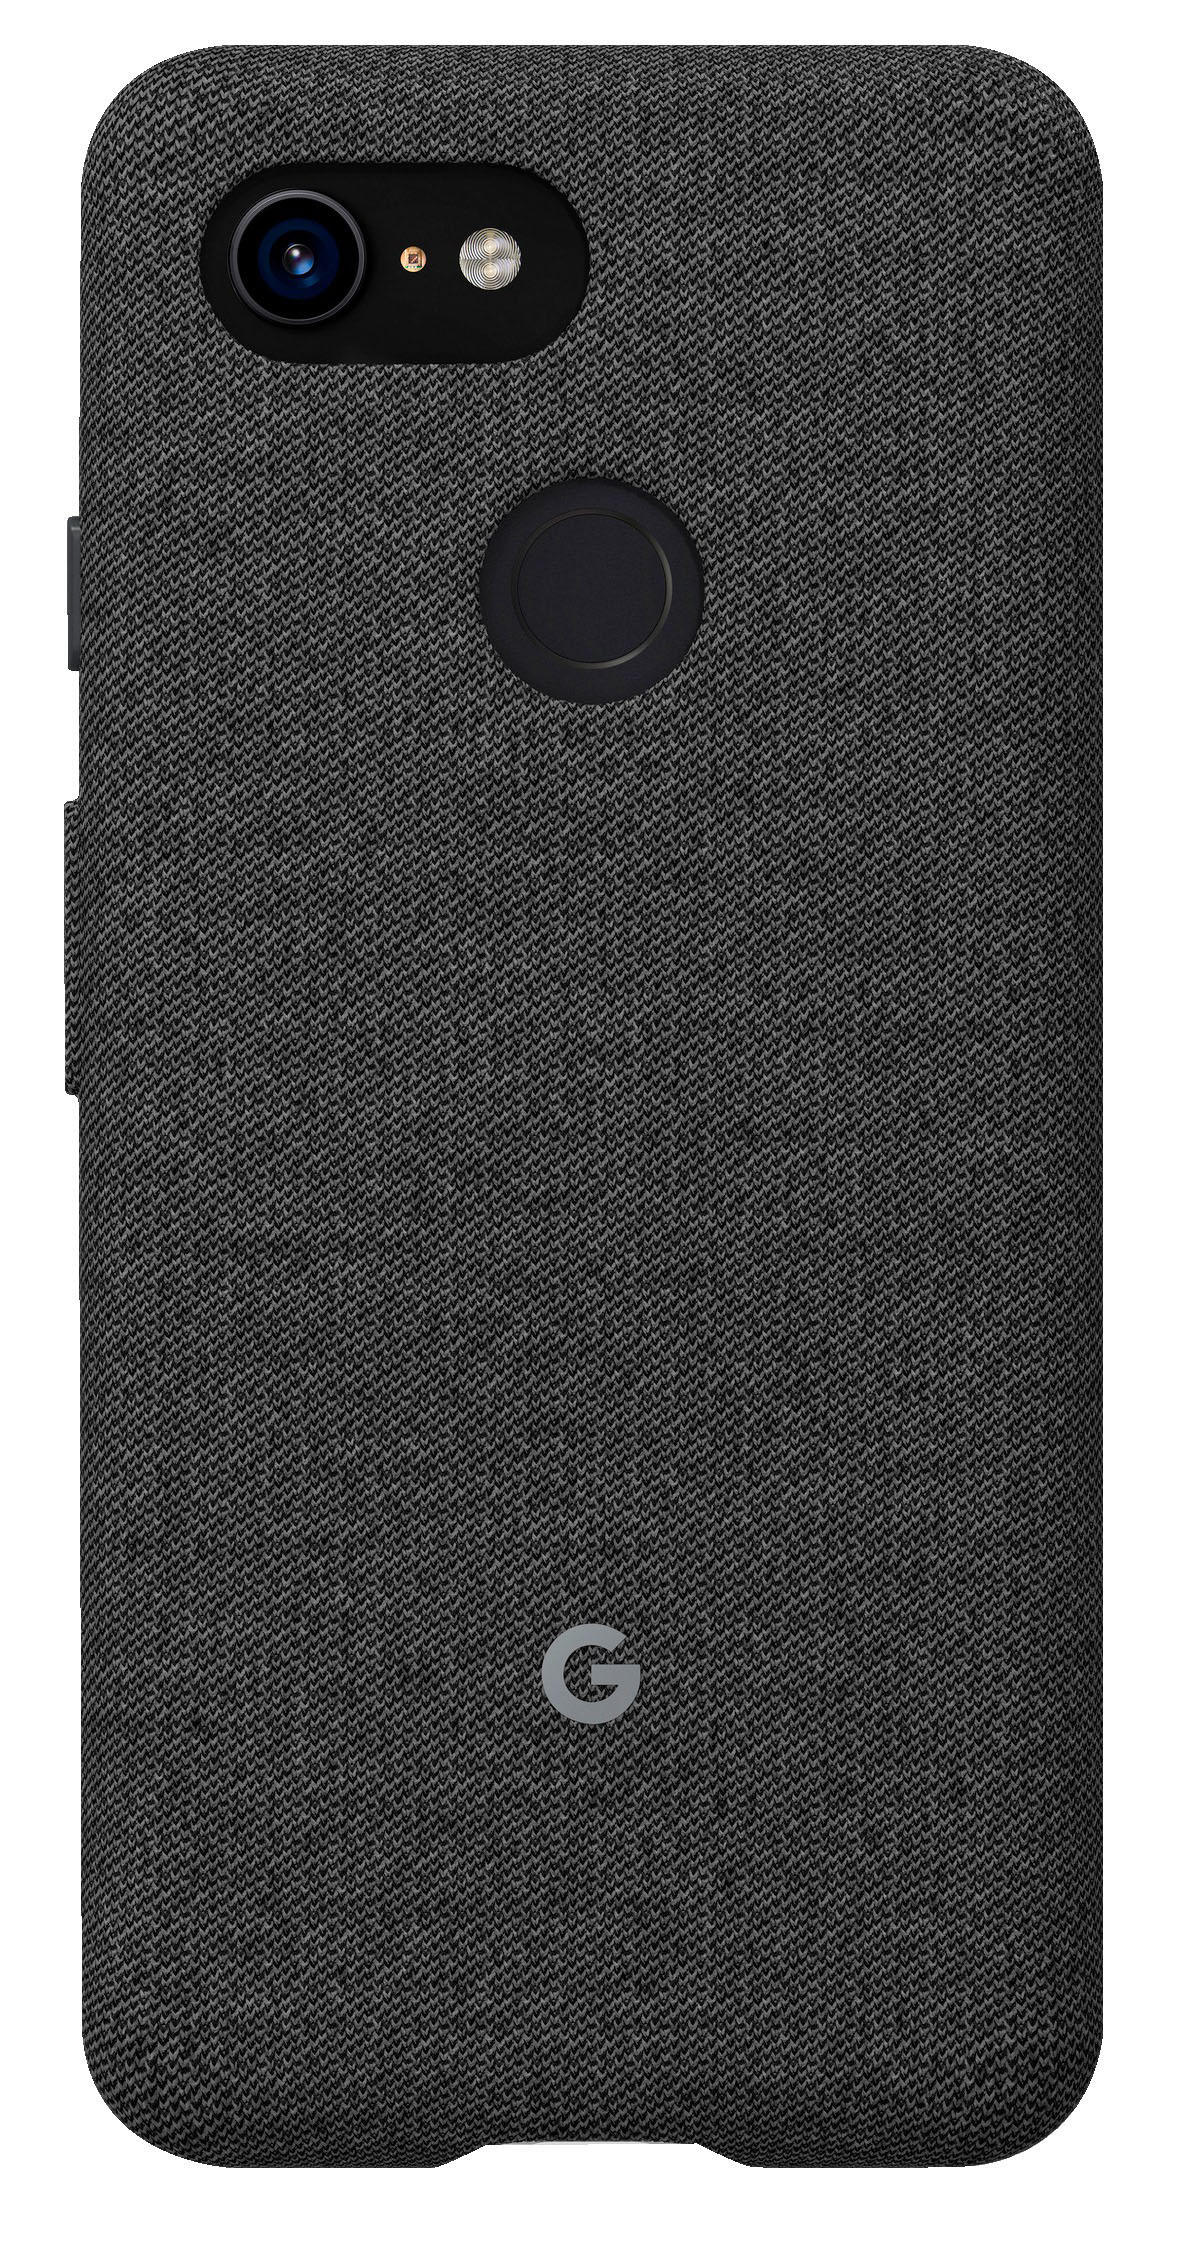 Pixel 3, Google, Backcover, GOOGLE Fabric, Carbon